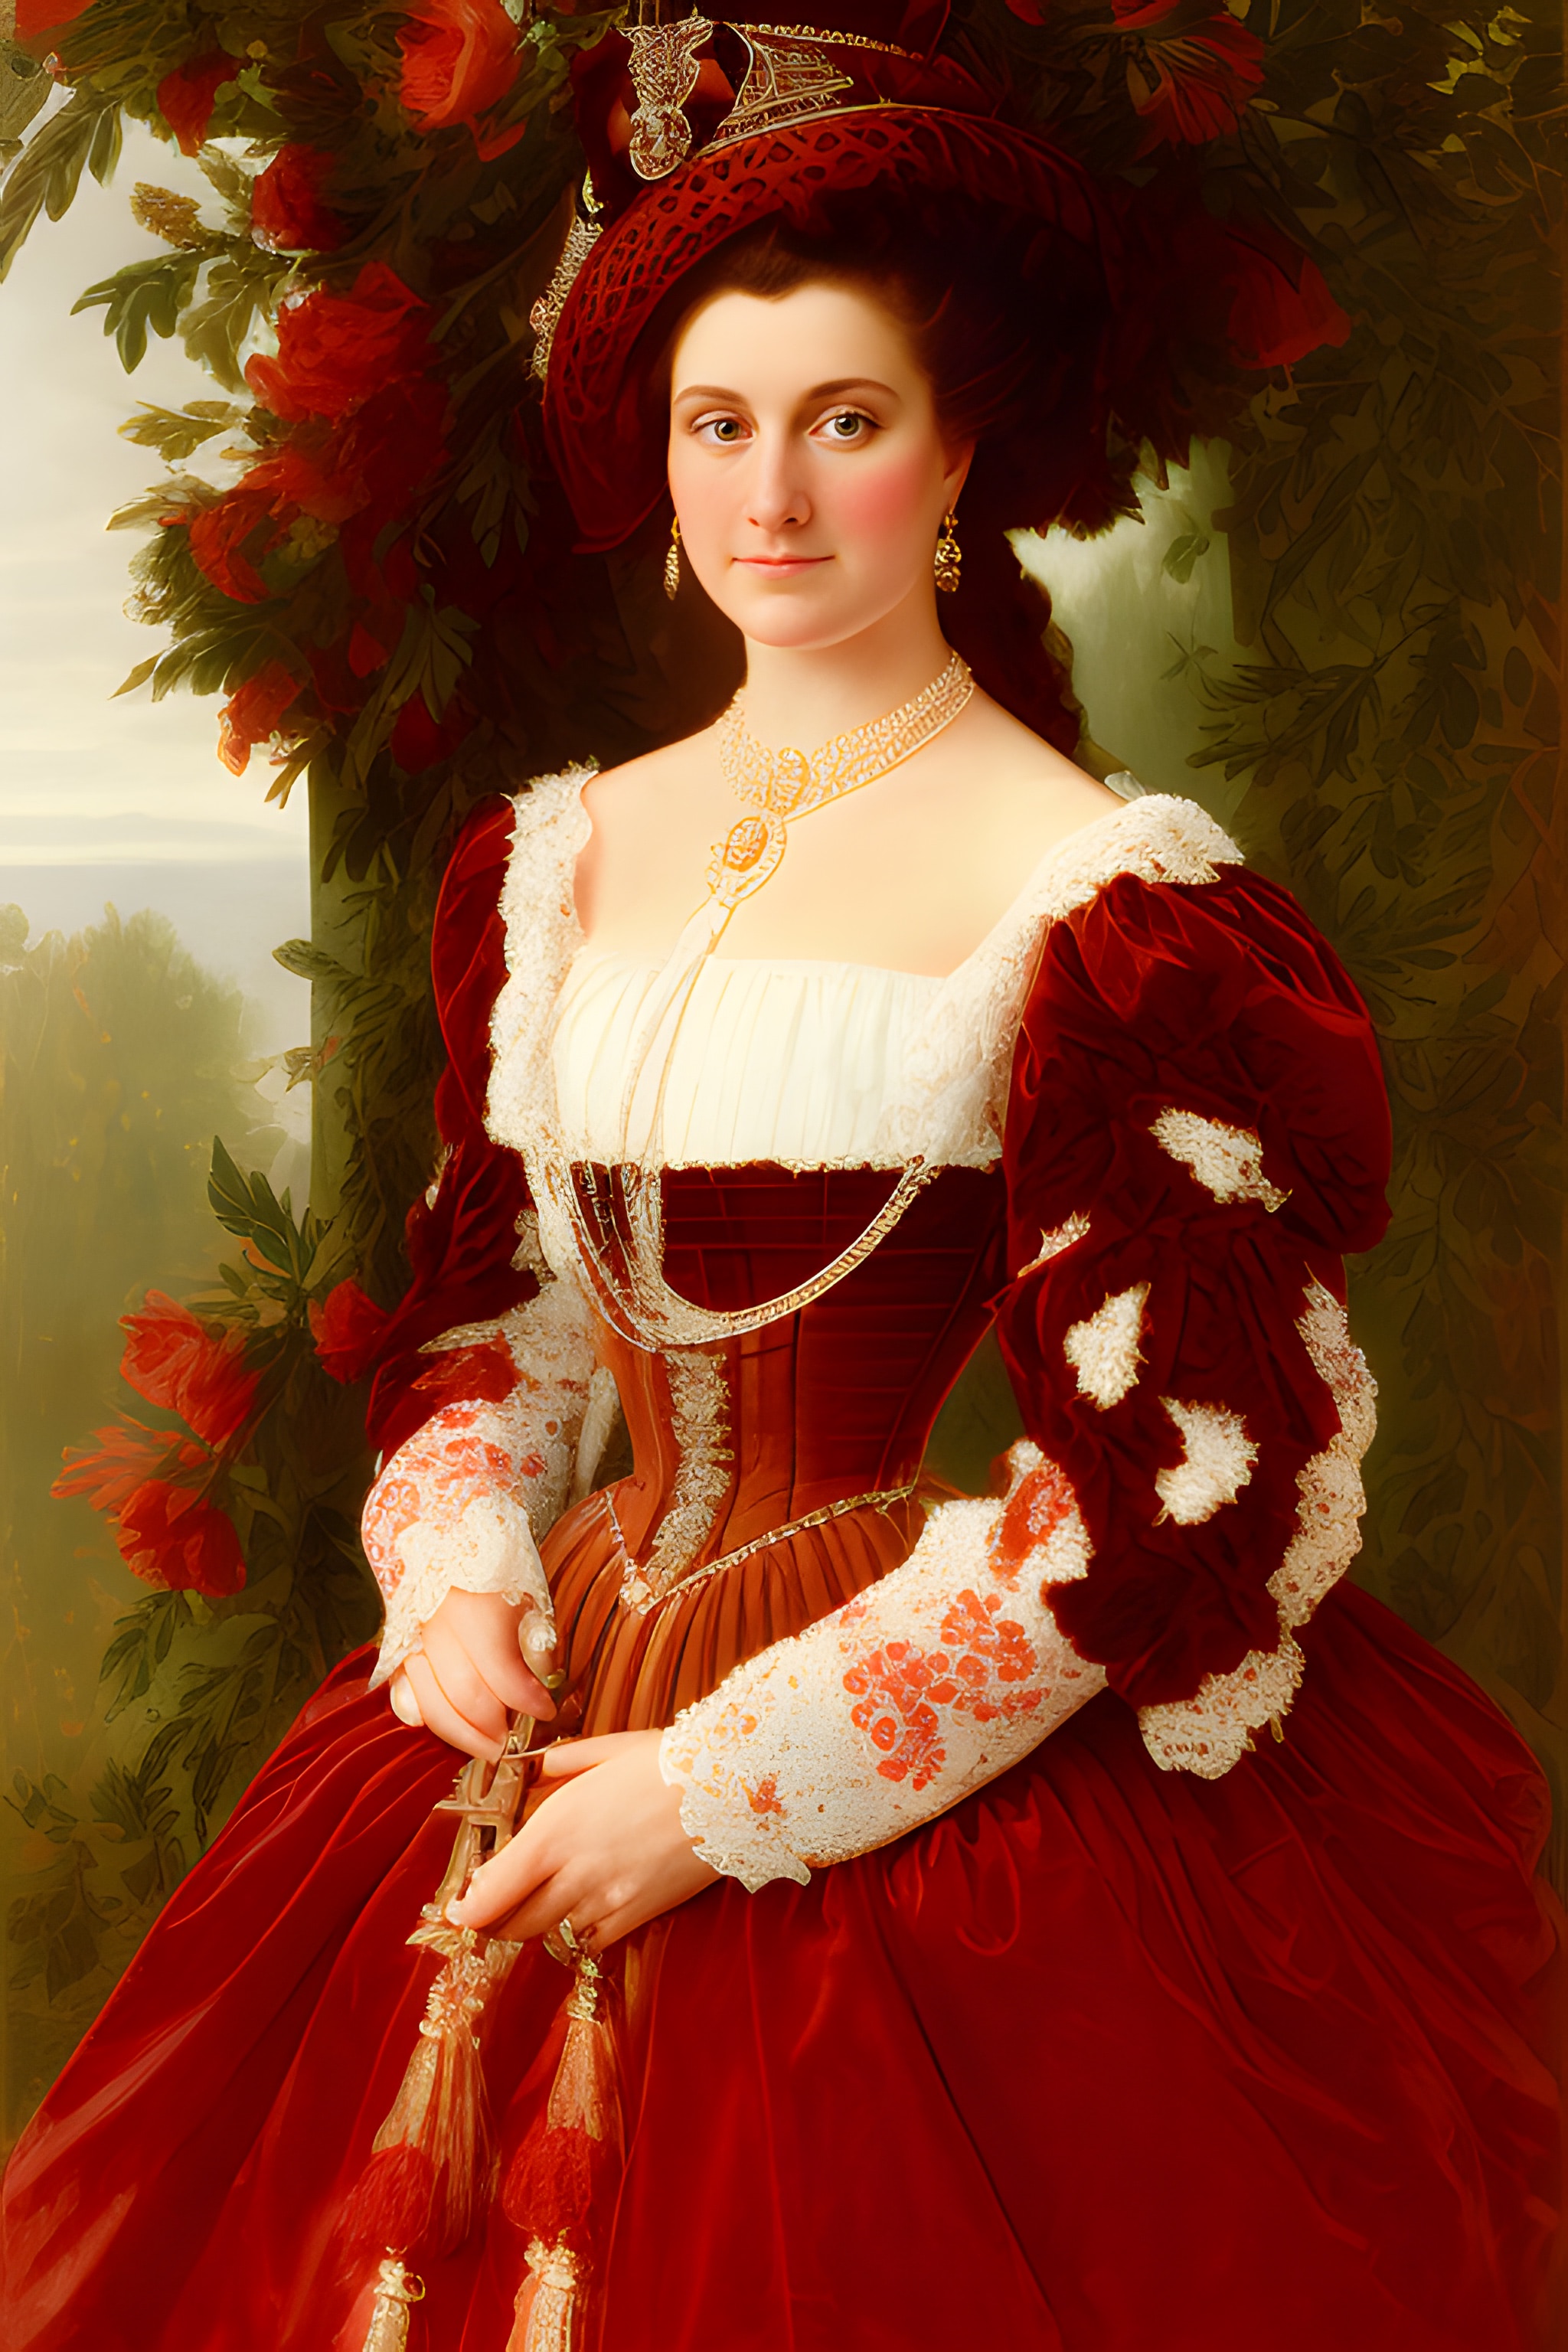 high-detail-portrait-of-a-American-queen-6gf4